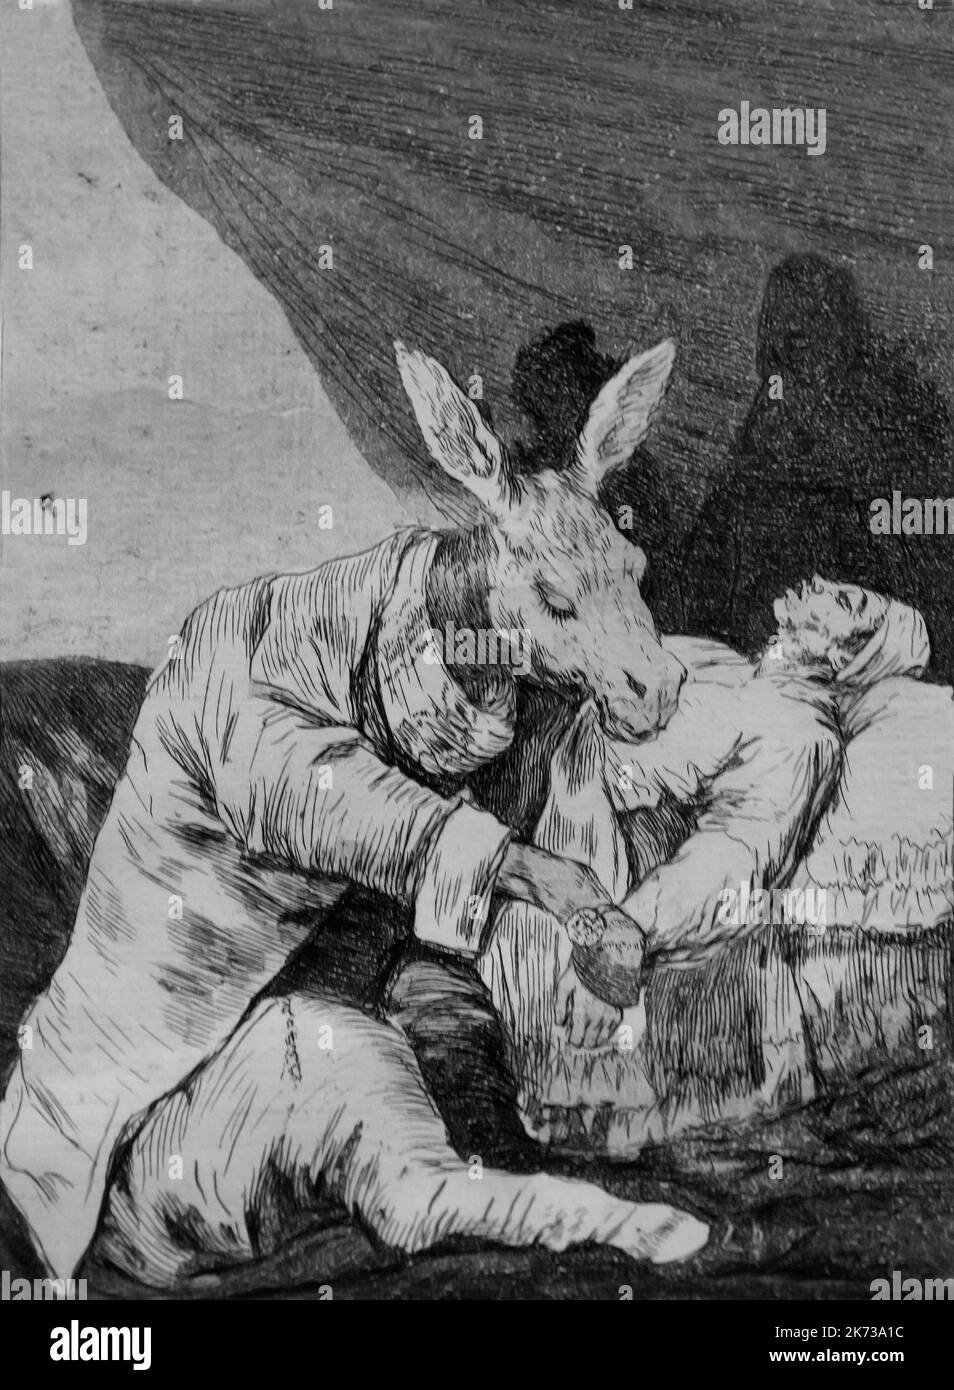 De quel malade mourra-t-il ? Francisco Goya, Los Caprichos, 1797-1798, Musée Berggruen, Berlin, Allemagne, Europe Banque D'Images